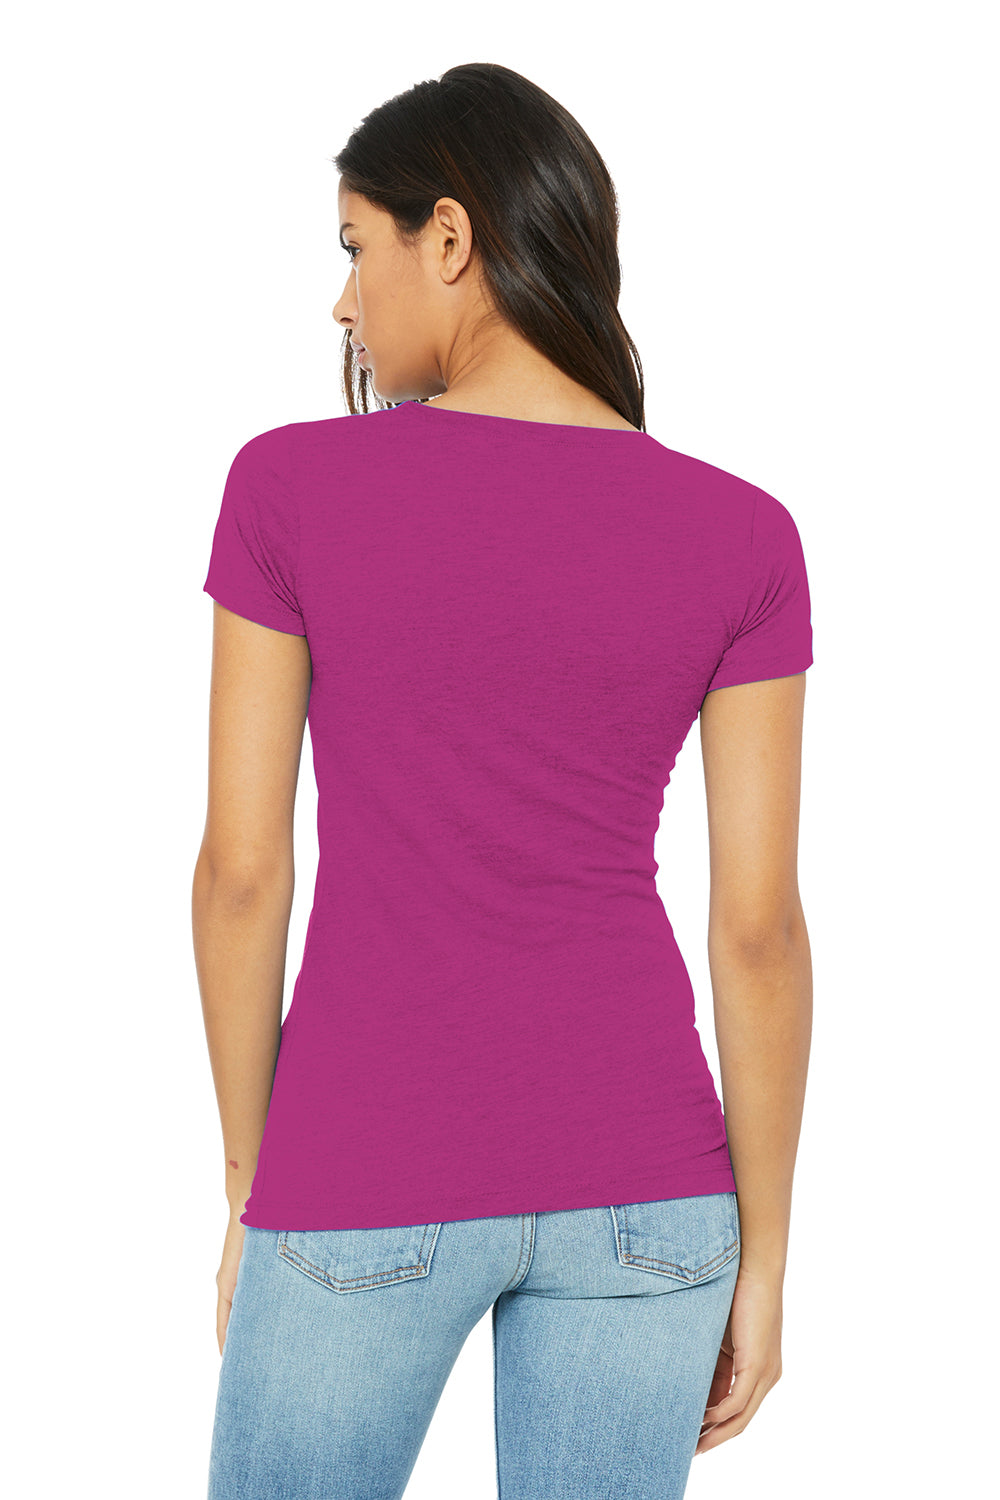 Bella + Canvas BC6004/6004 Womens The Favorite Short Sleeve Crewneck T-Shirt Berry Pink Model Back